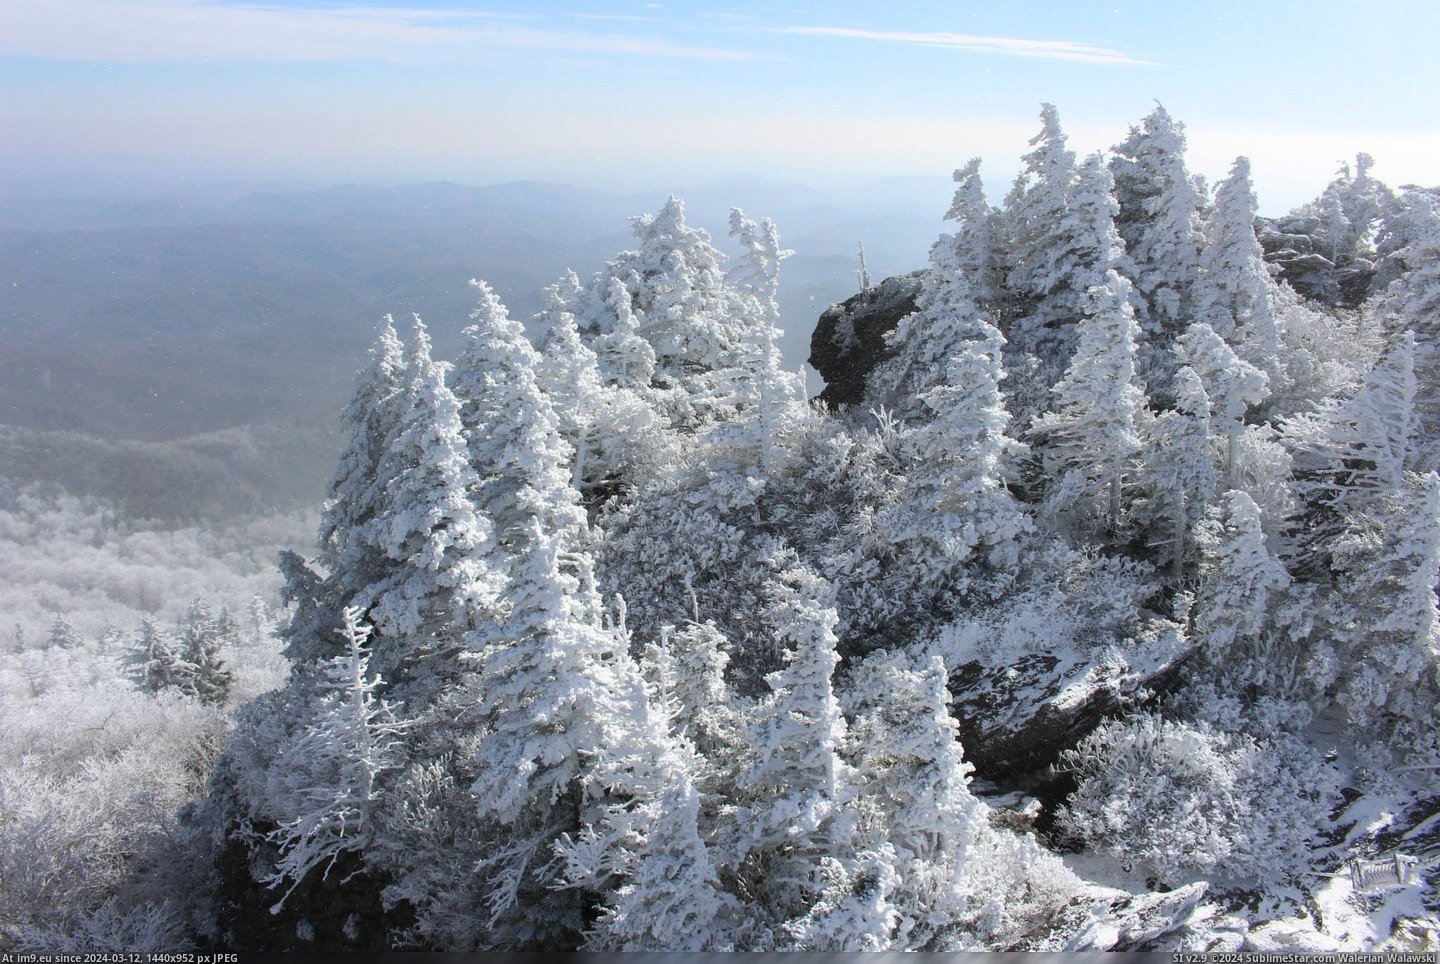 #Snow #Mountain #Grandfather #Kellen #Covered #Short [Earthporn] Grandfather Mountain Covered in Snow Today (11-14-2014) by Kellen Short - [2048 x 1366] Pic. (Изображение из альбом My r/EARTHPORN favs))